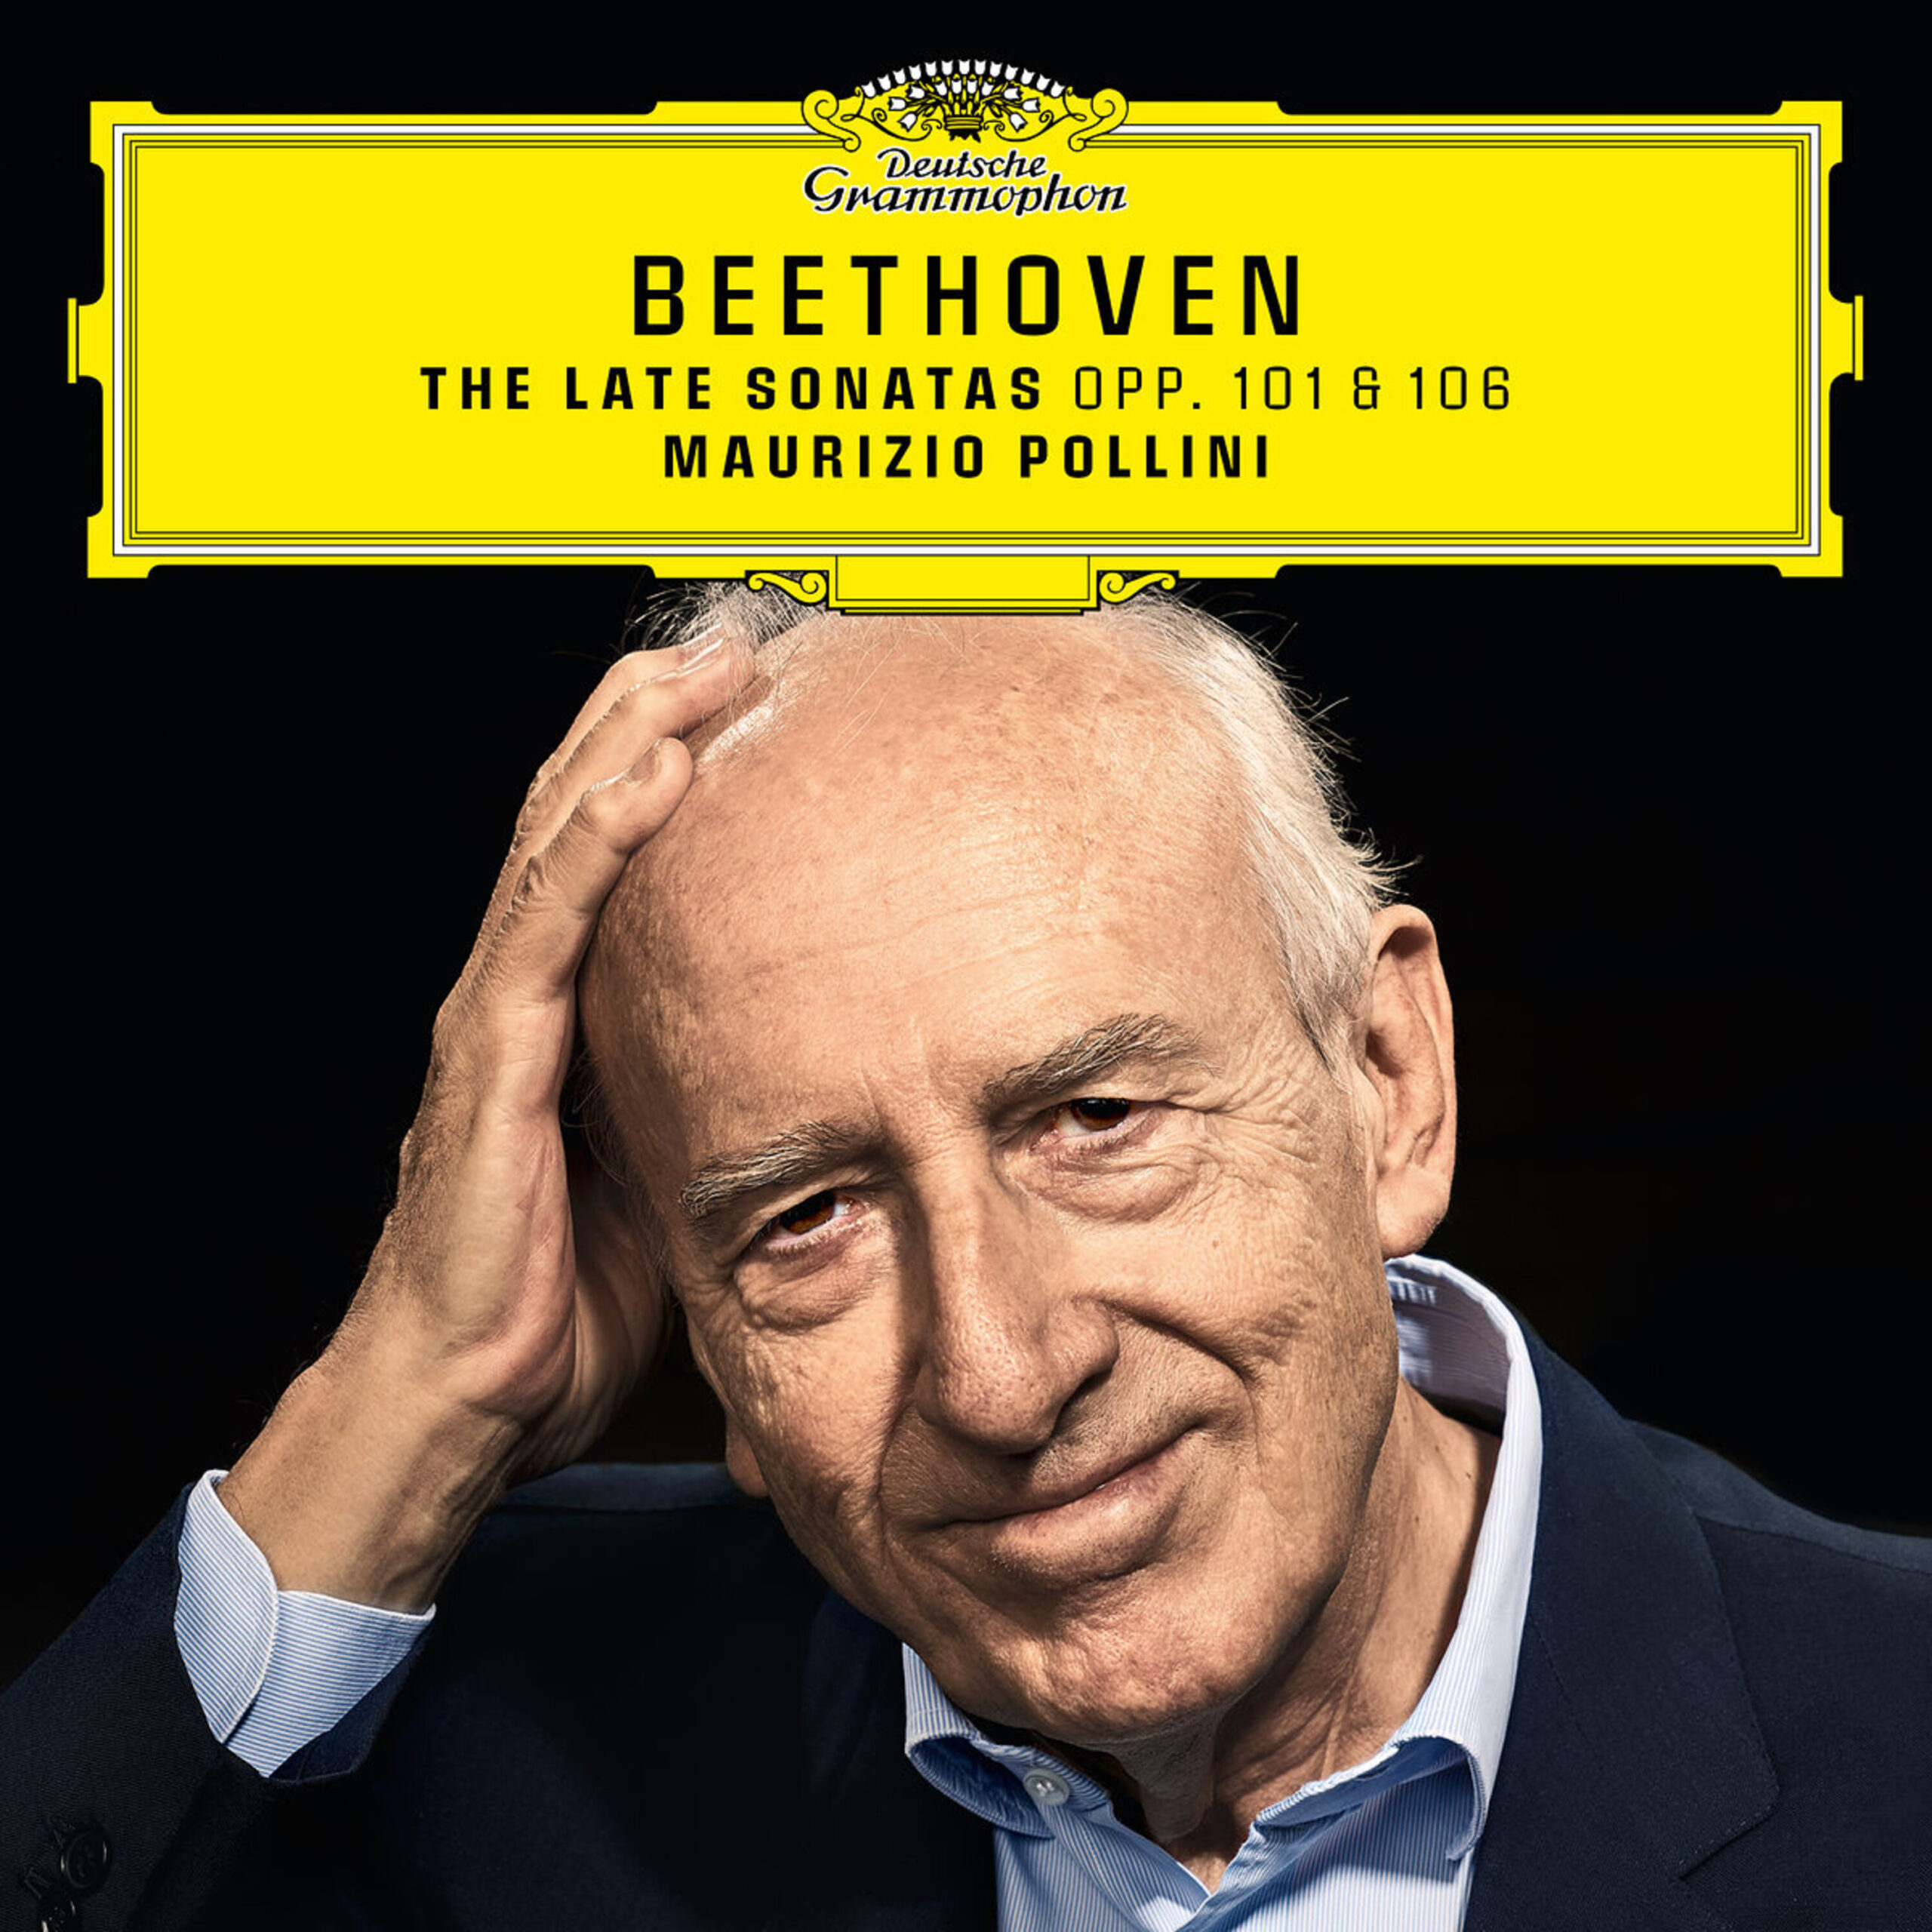 Maurizio Pollini – Beethoven, the late sonatas